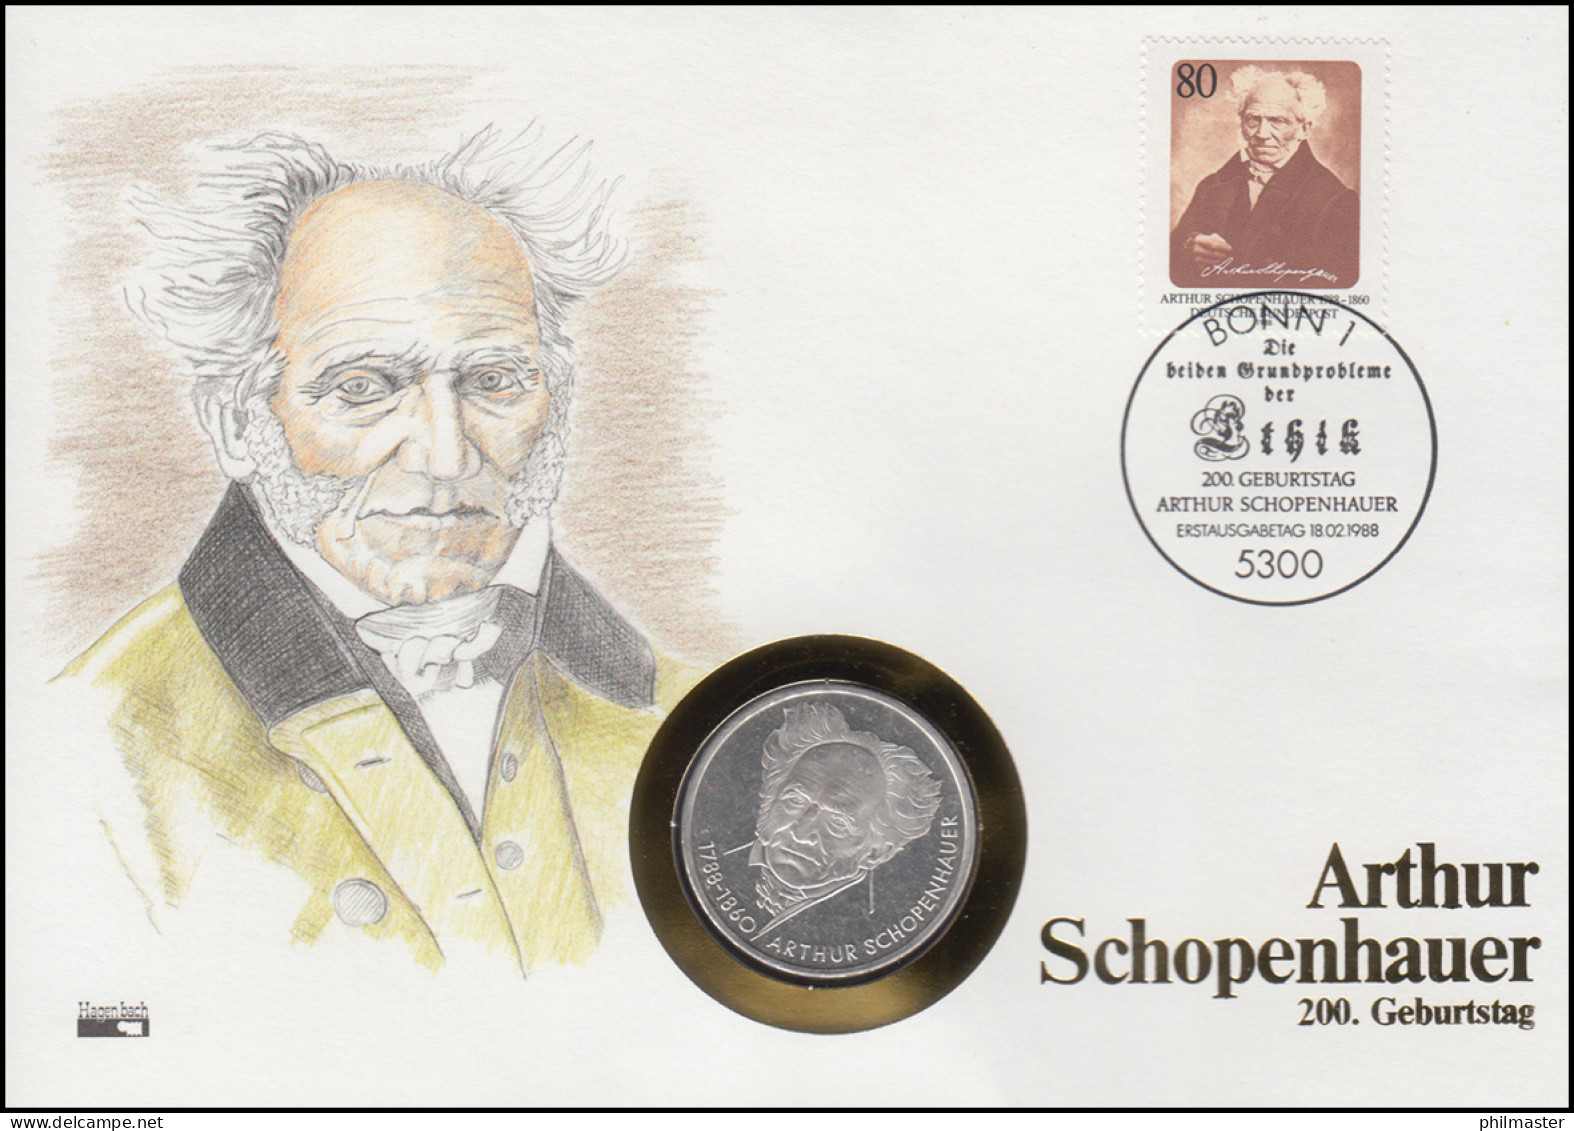 Numisbrief Arthur Schopenhauer, 10 DM / 80 Pf., ESST Bonn 18.2.1988 - Numisbriefe